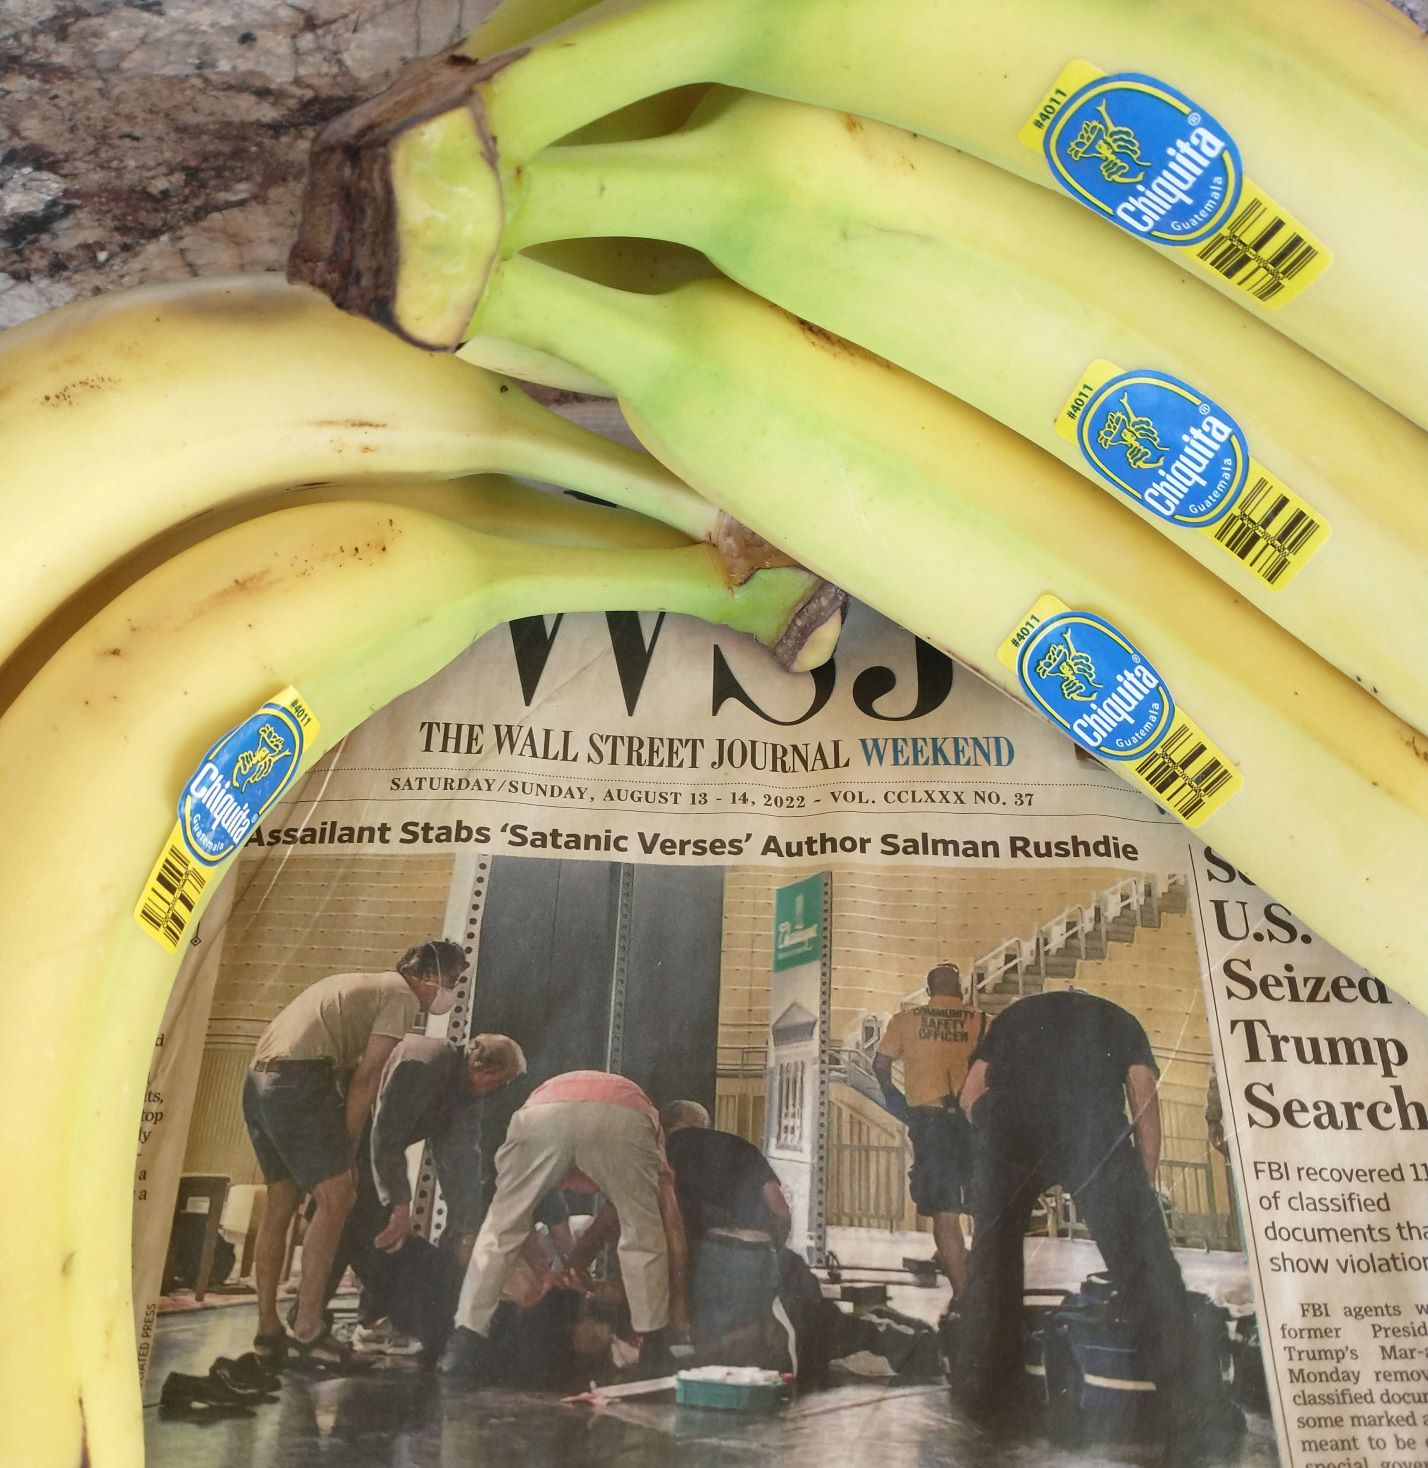 Bananas today2.jpg